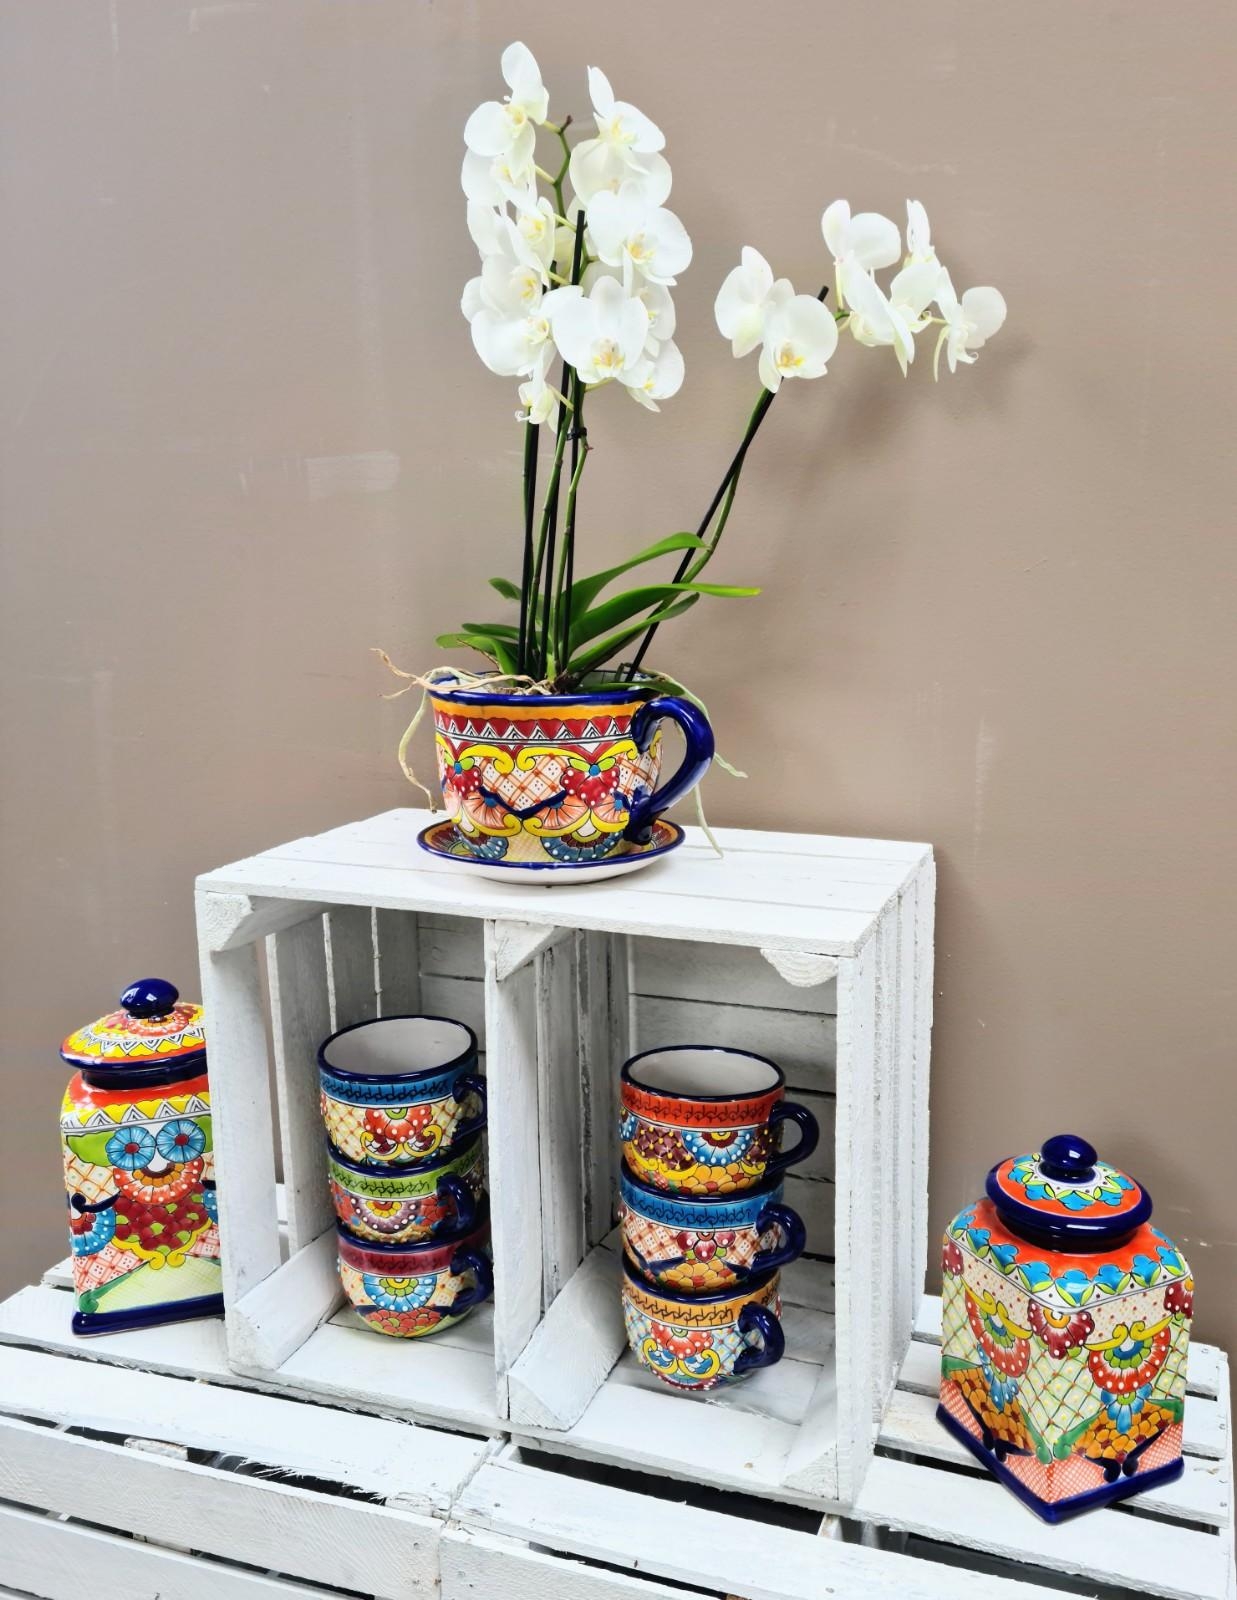 Farbenfrohe #deko mit handbemalter Keramik. #pflanztasse #keksdosen #tassen #dekoideen #dekoration #diydeko